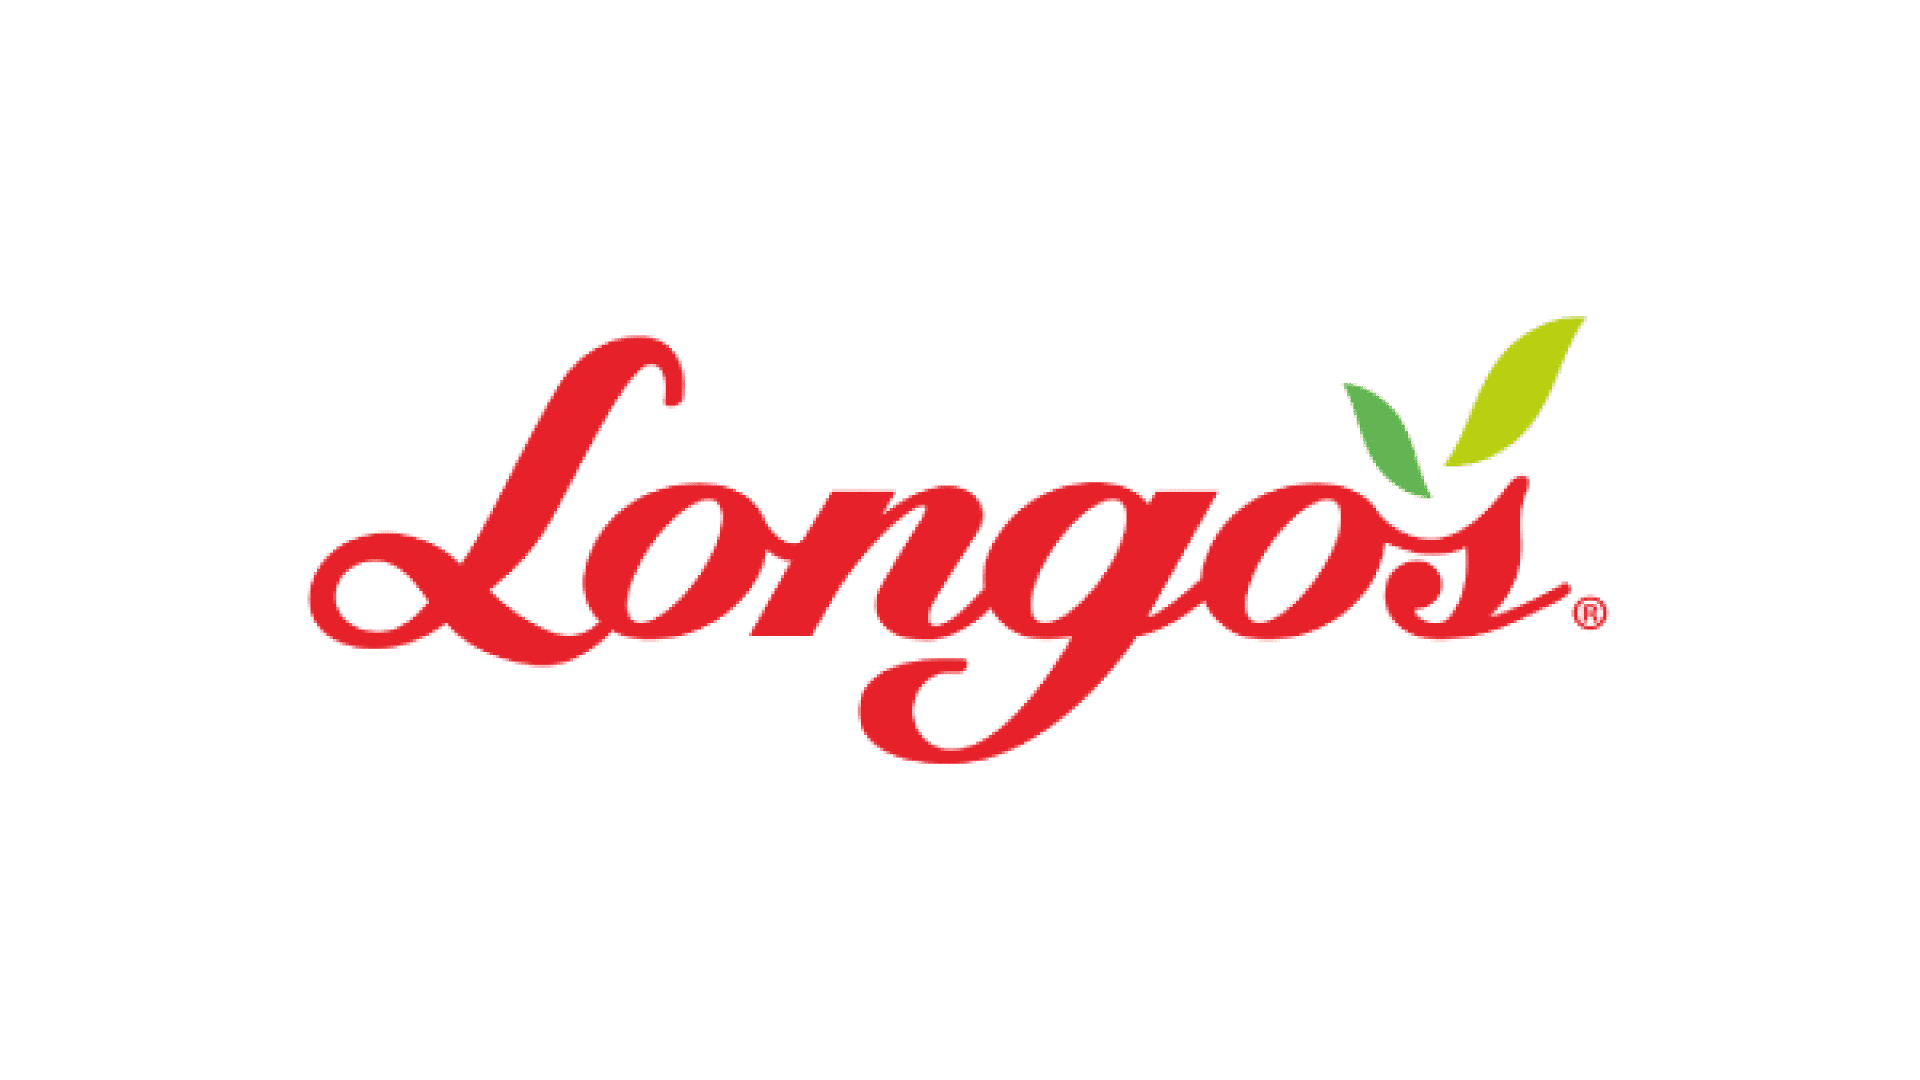 Longo's Fruit Market works with CADS